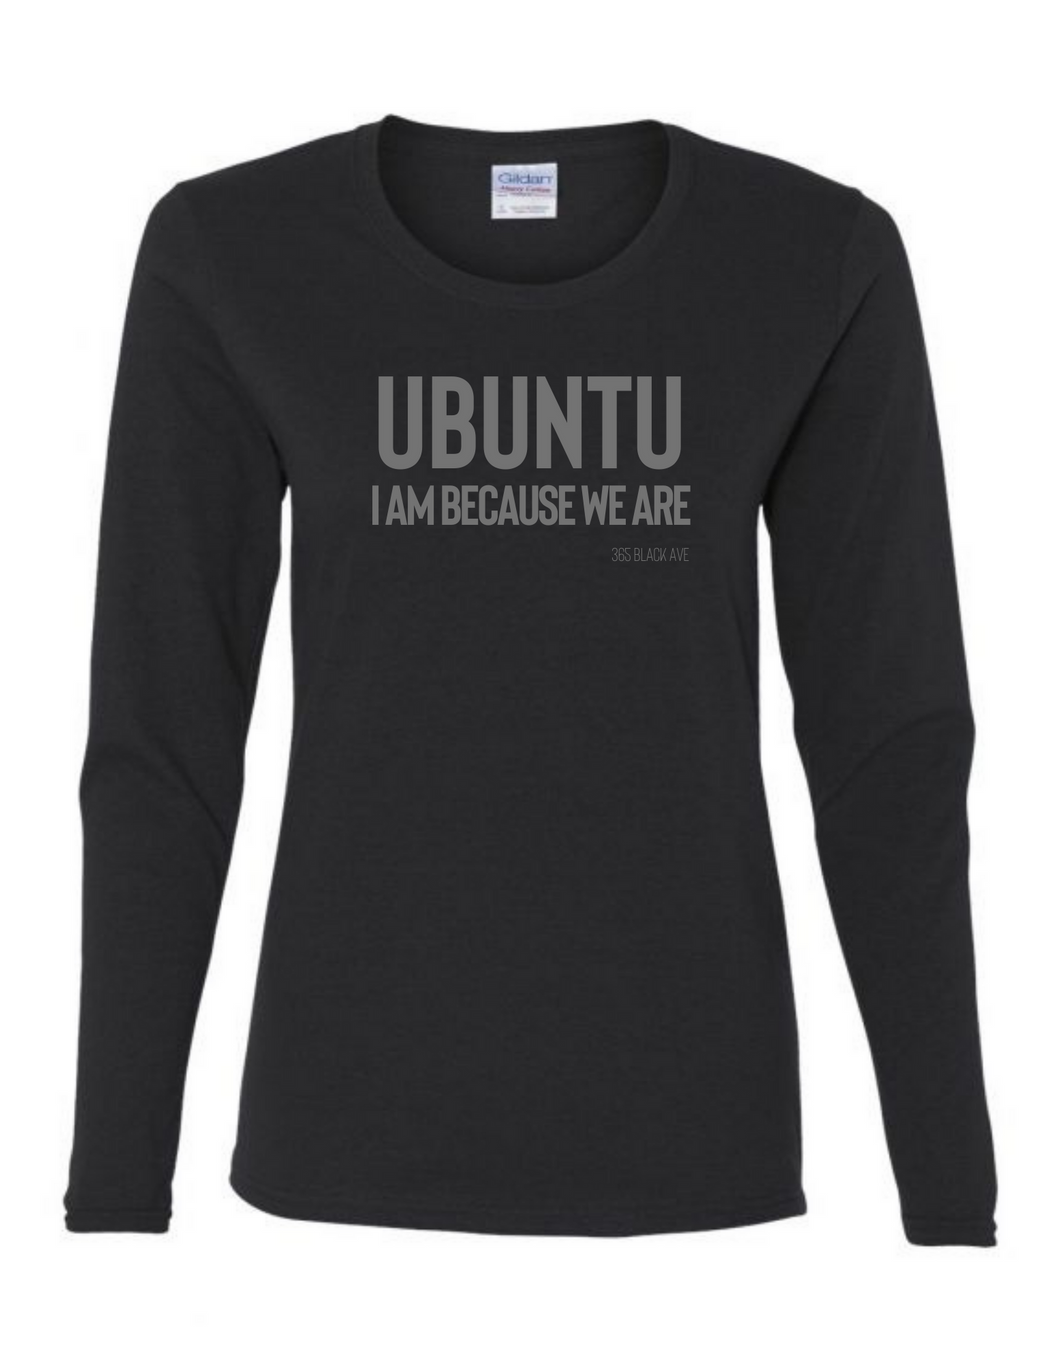 UBUNTU Long Sleeve Tee - Women's Cut